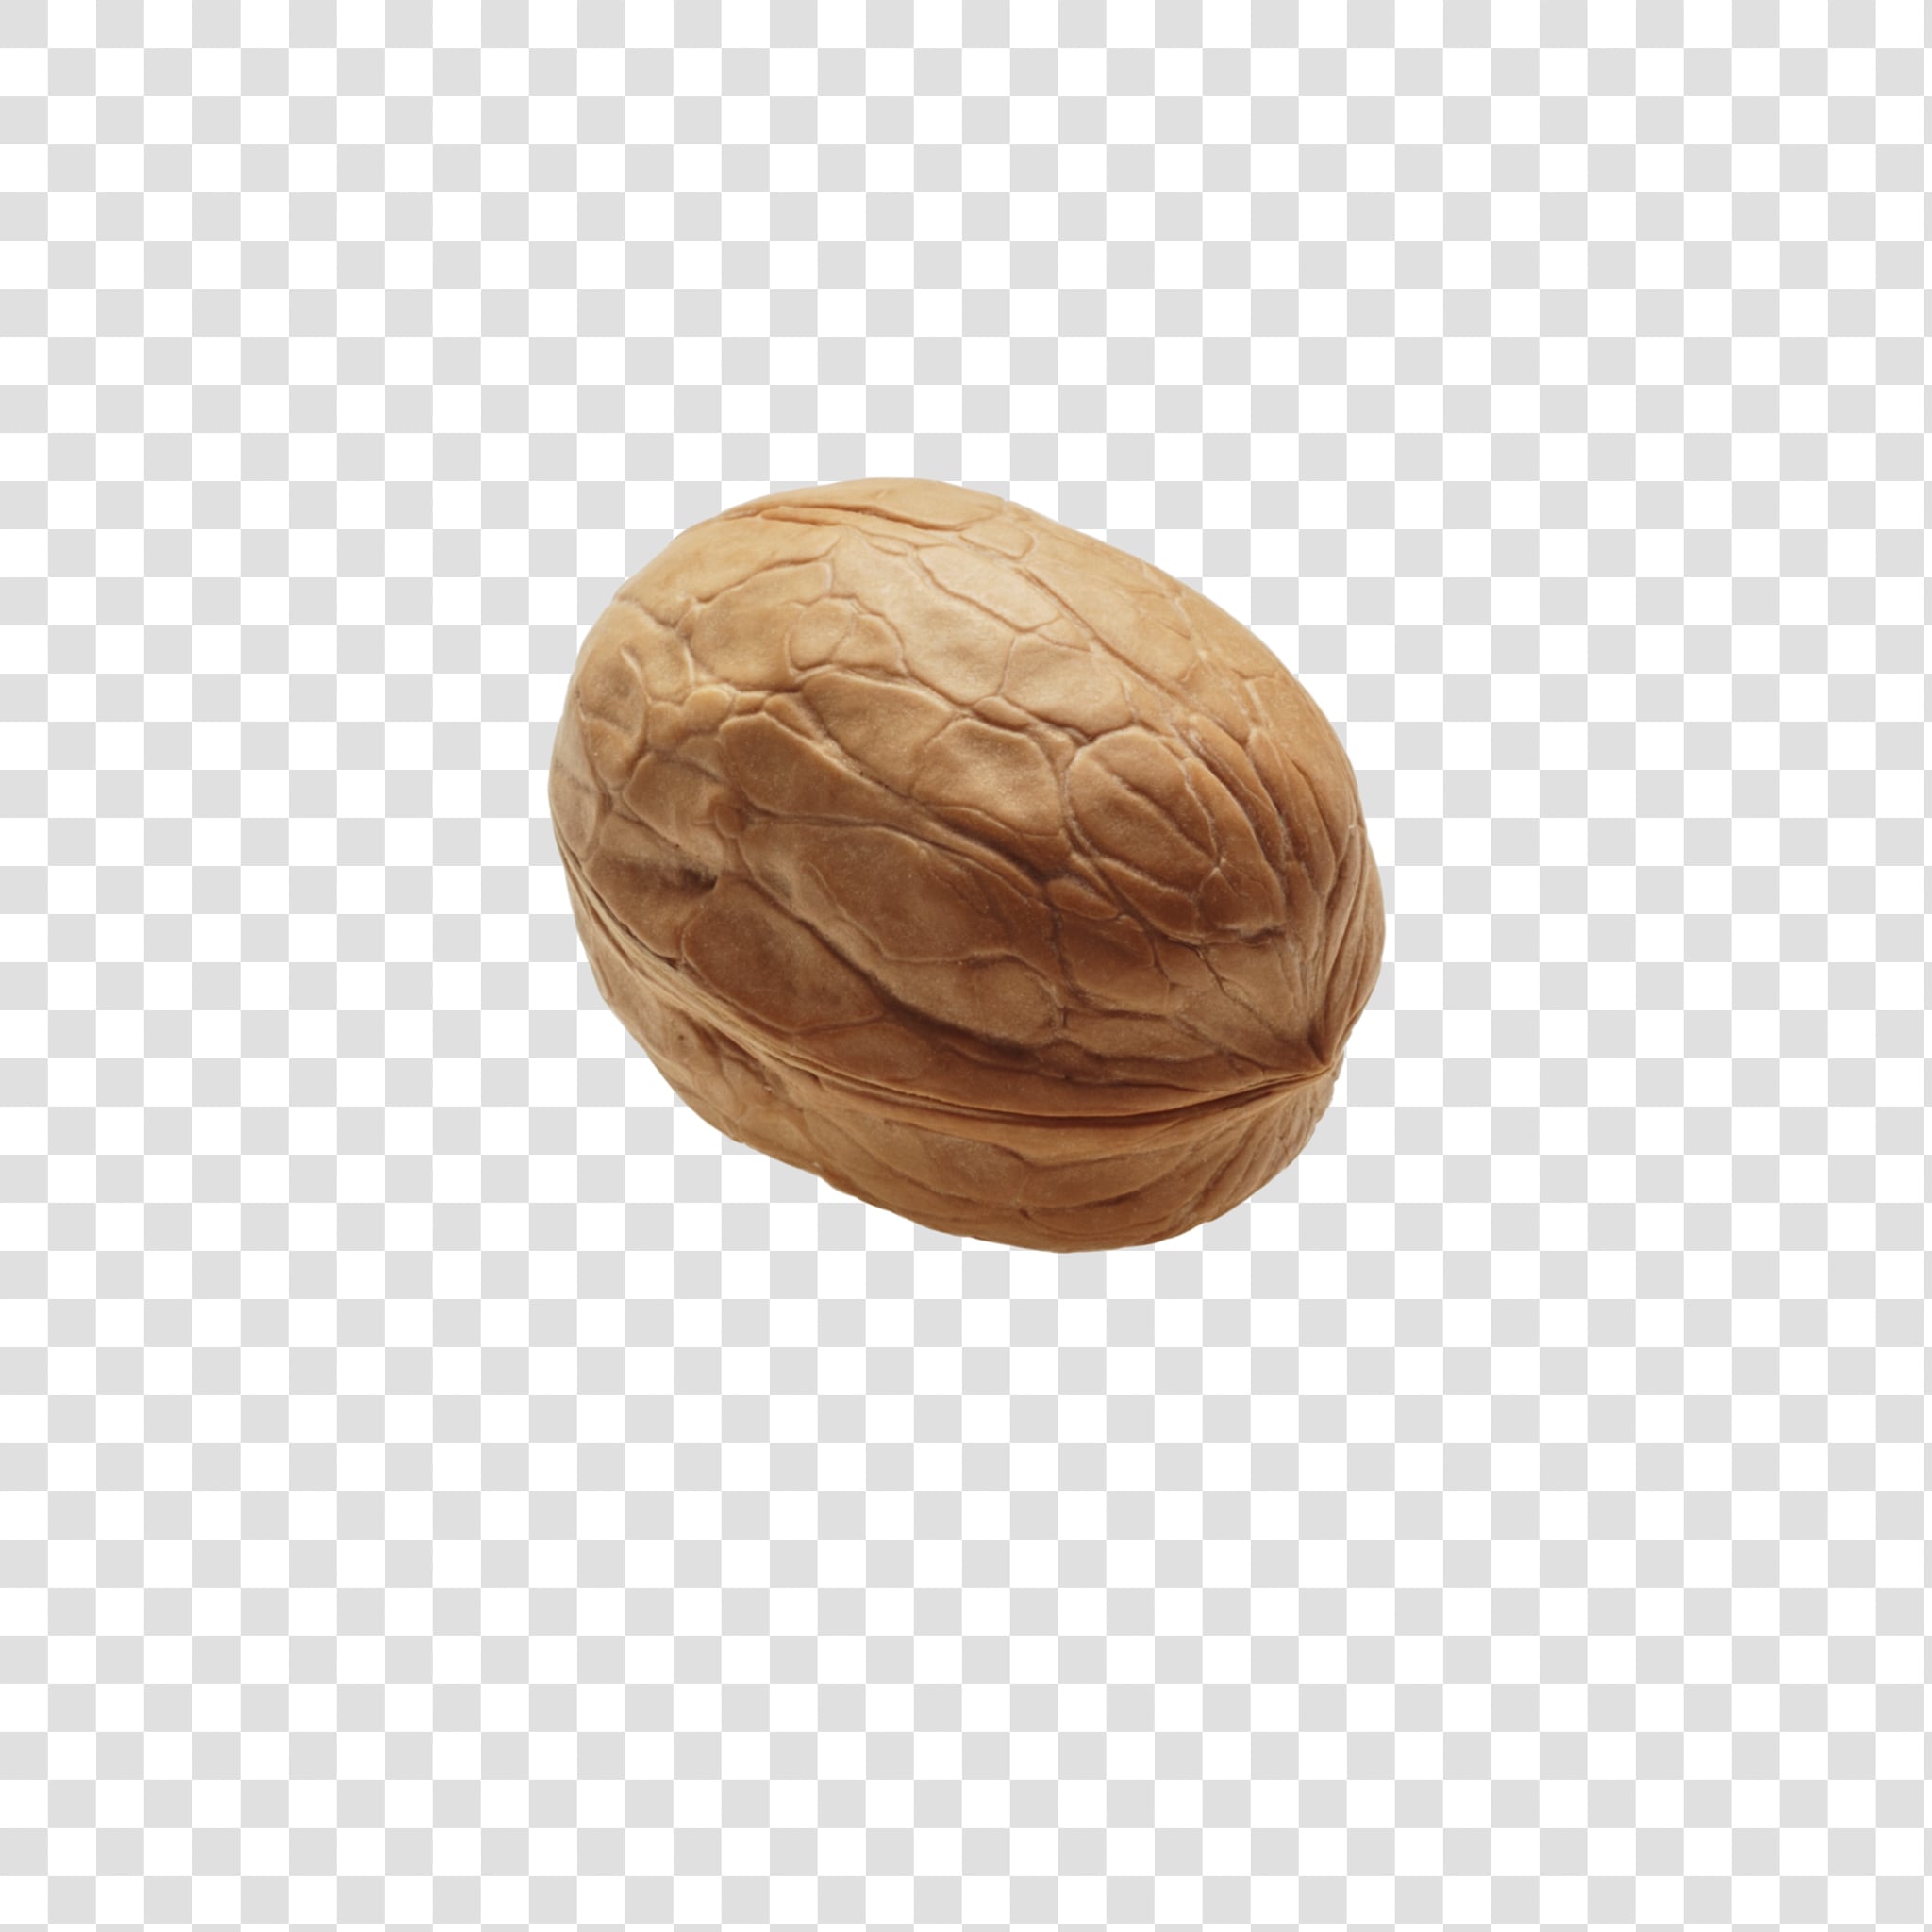 Walnut image with transparent background